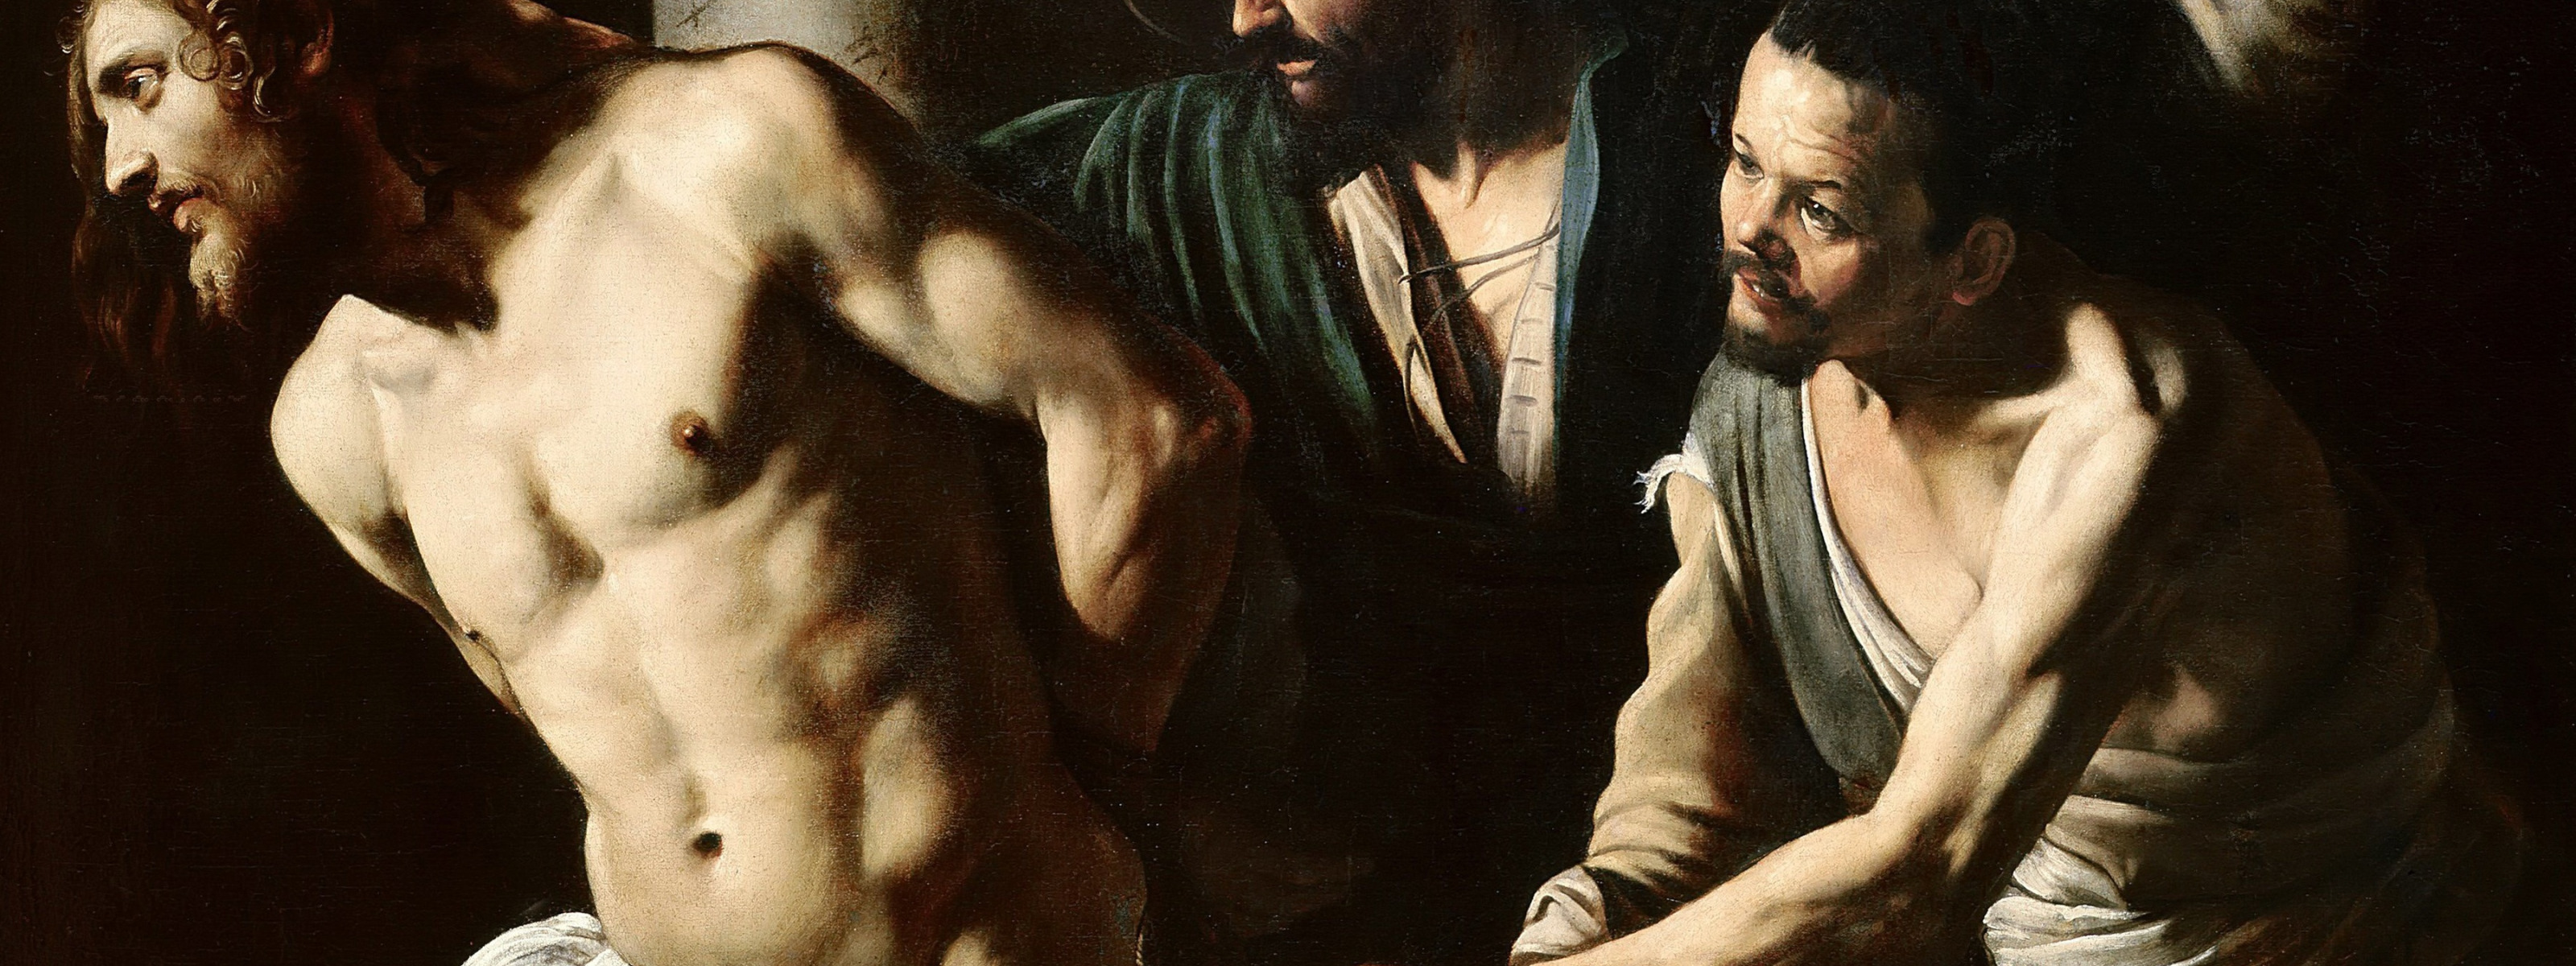 Караваджо 1986. Караваджо бичевание Христа. Микеланджело де Караваджо.